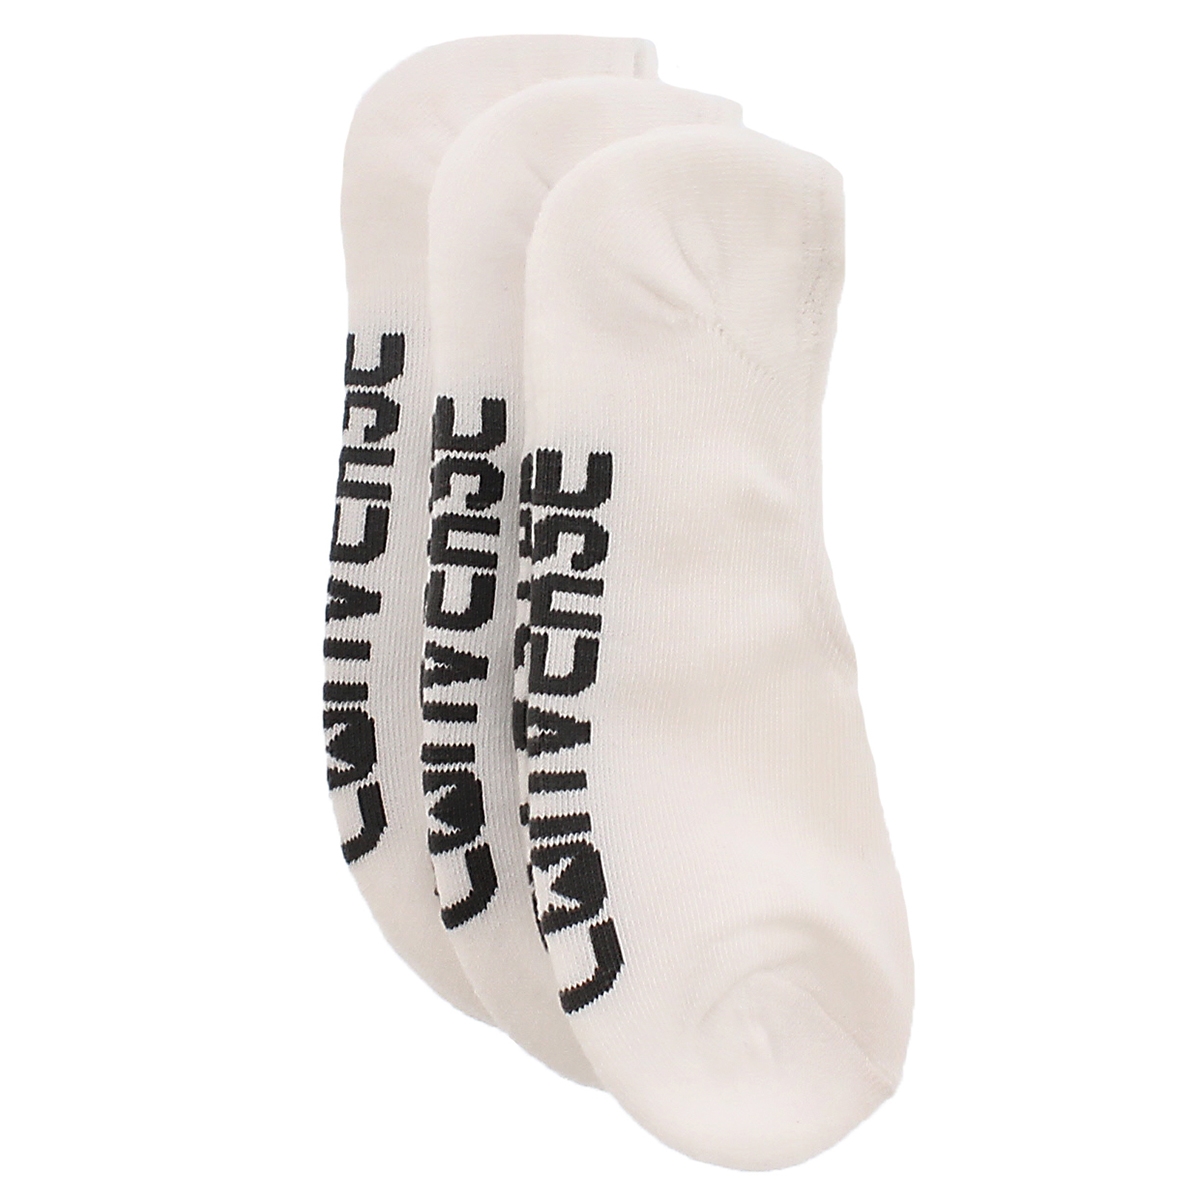 Socquettes logo MADE FOR CHUCKS, blanc, femmes-3p.